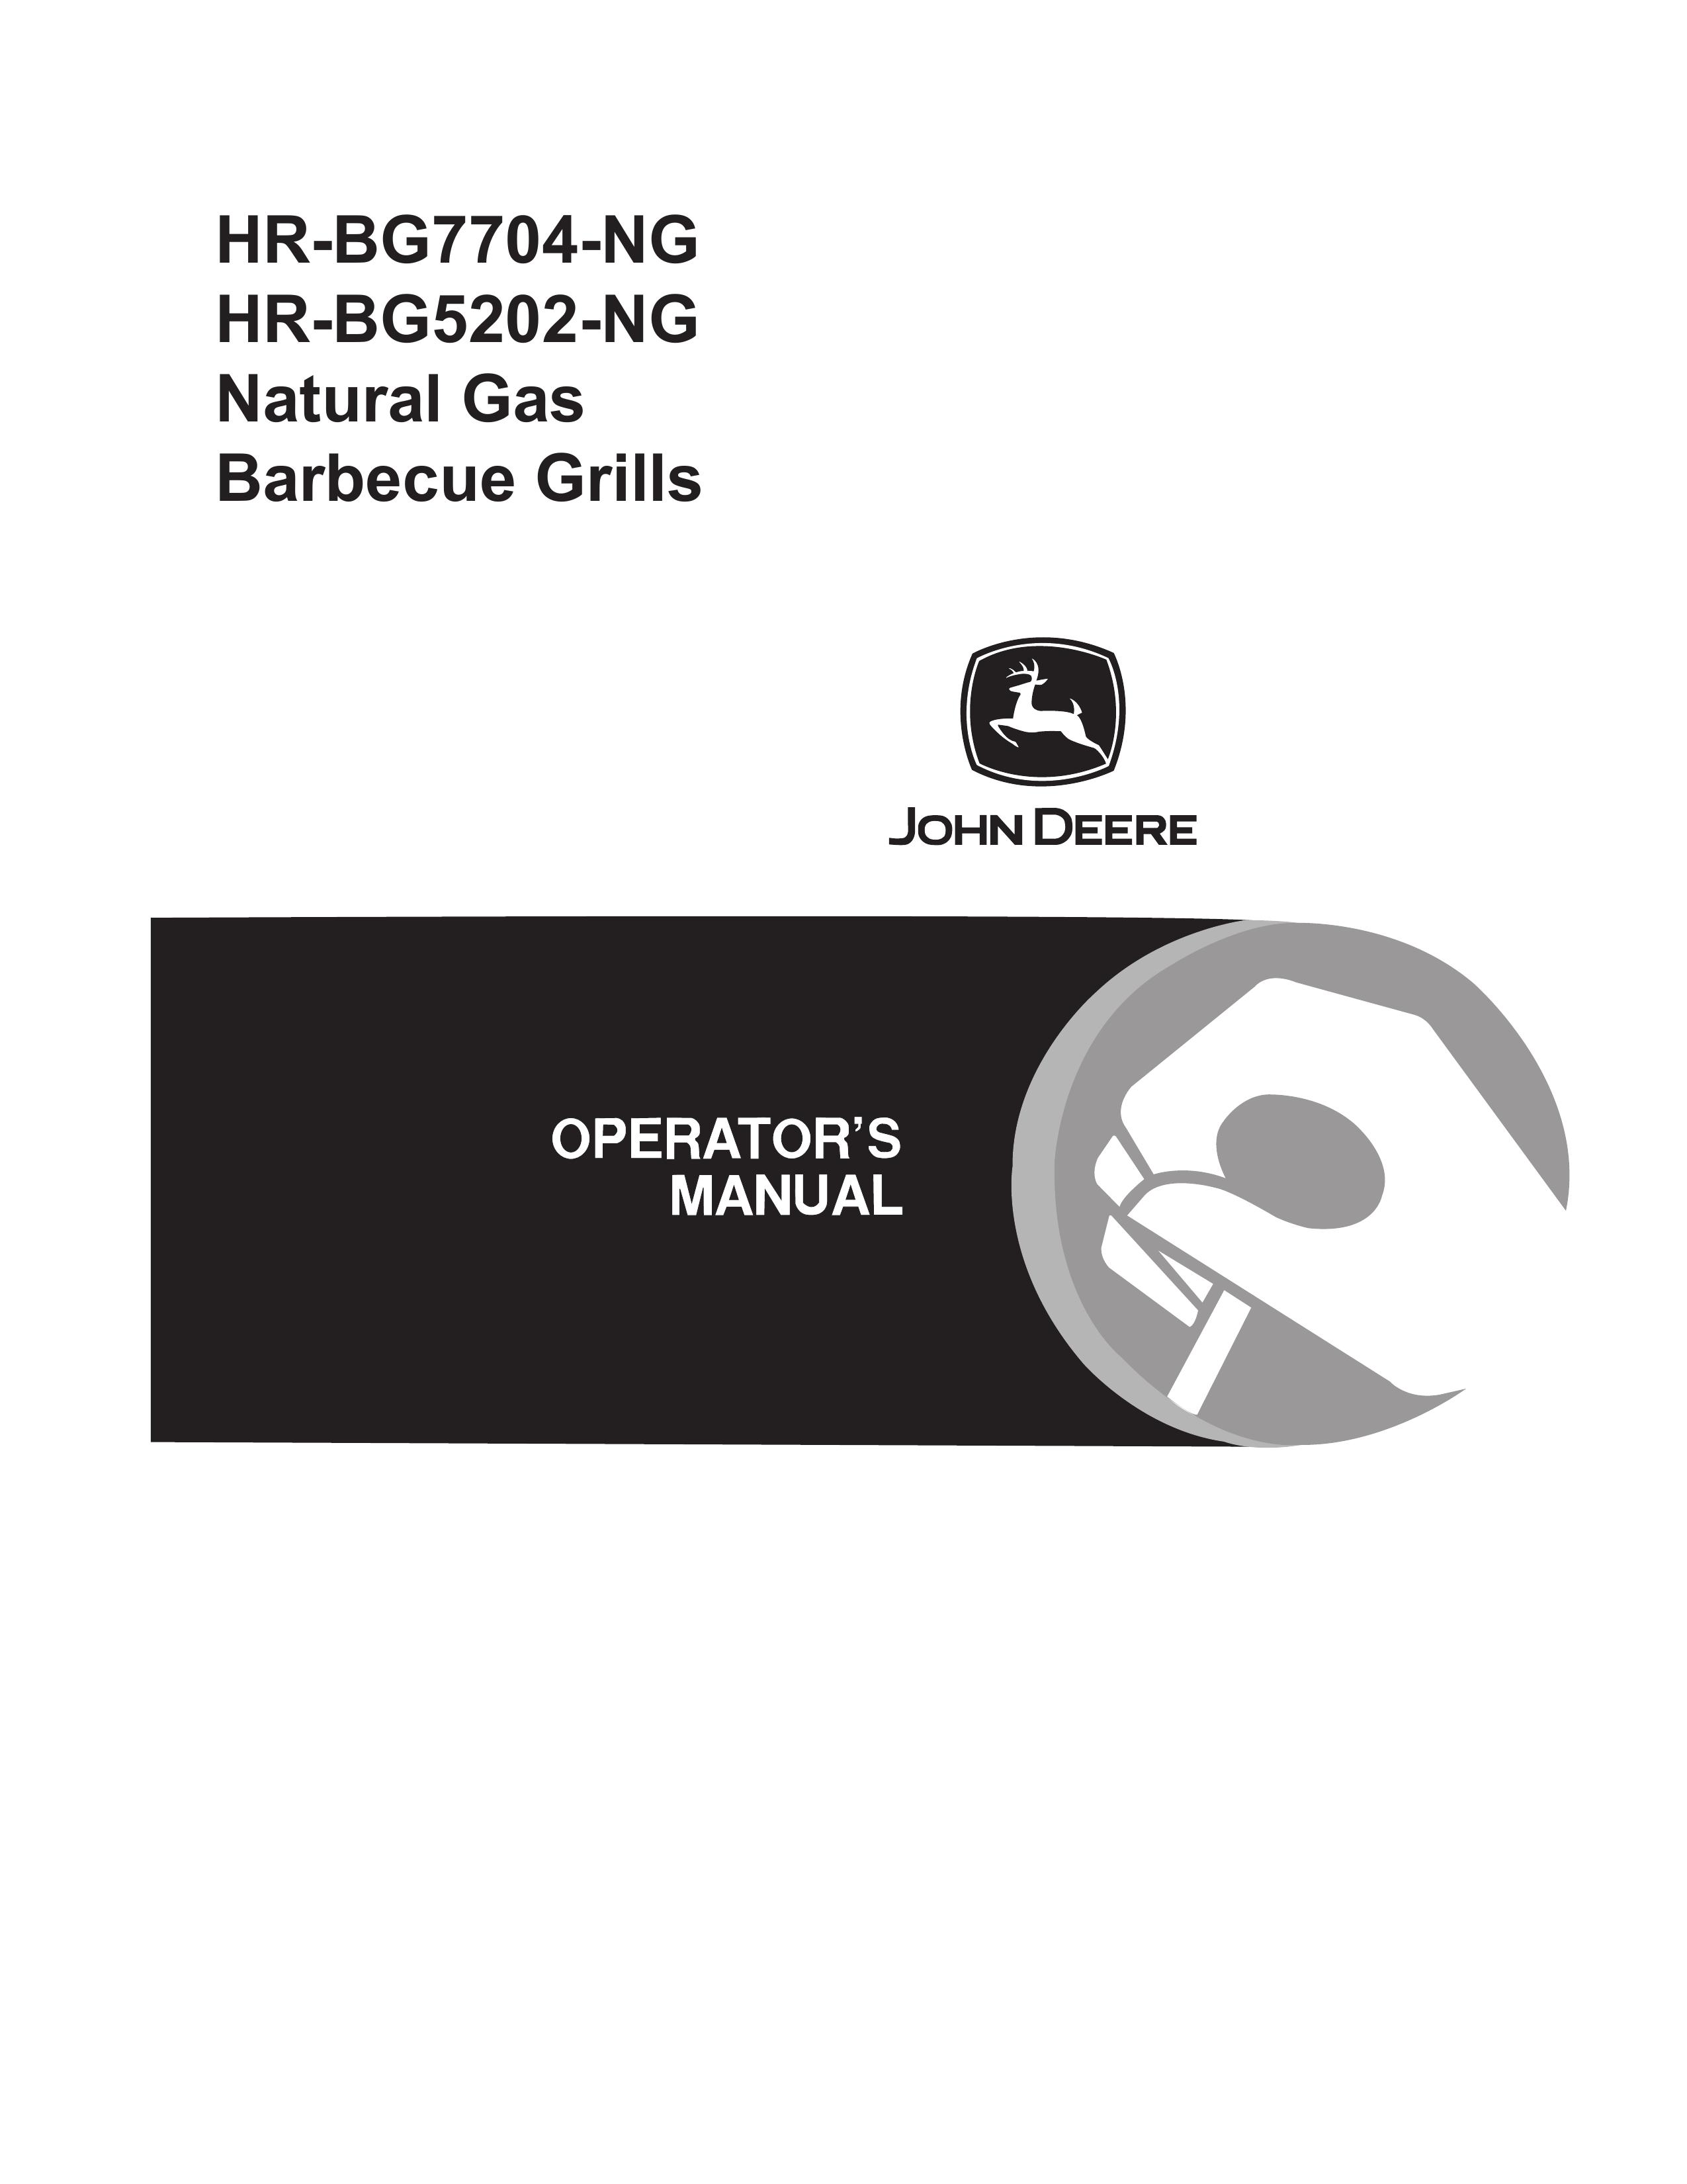 John Deere HR-BG7704-NG Gas Grill User Manual